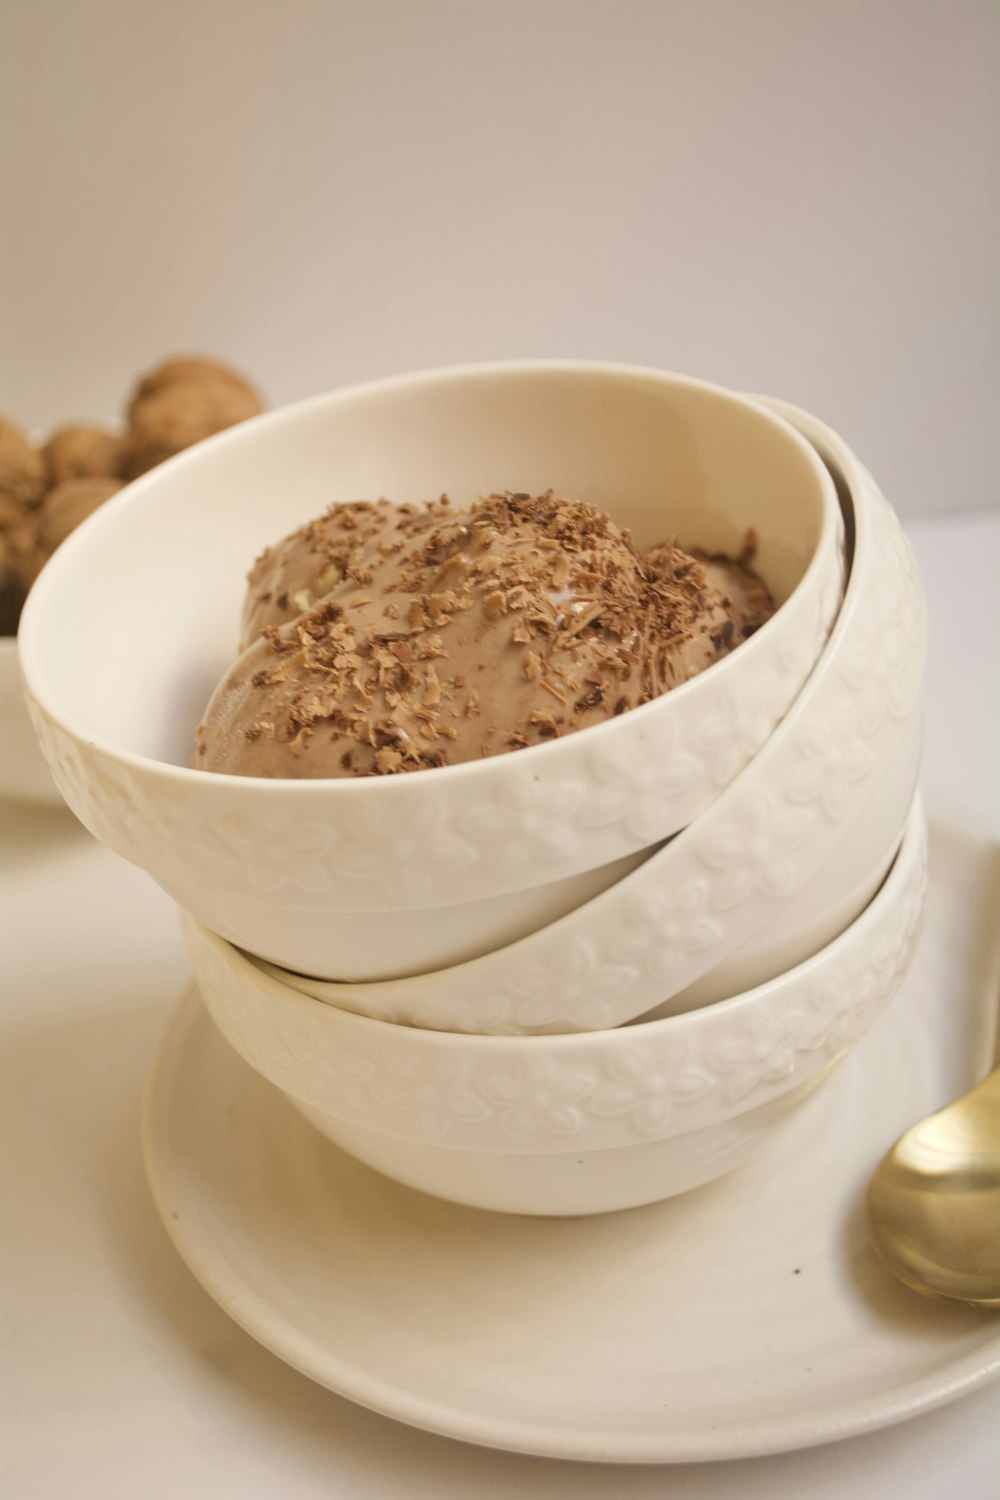 brown powder in white ceramic bowl